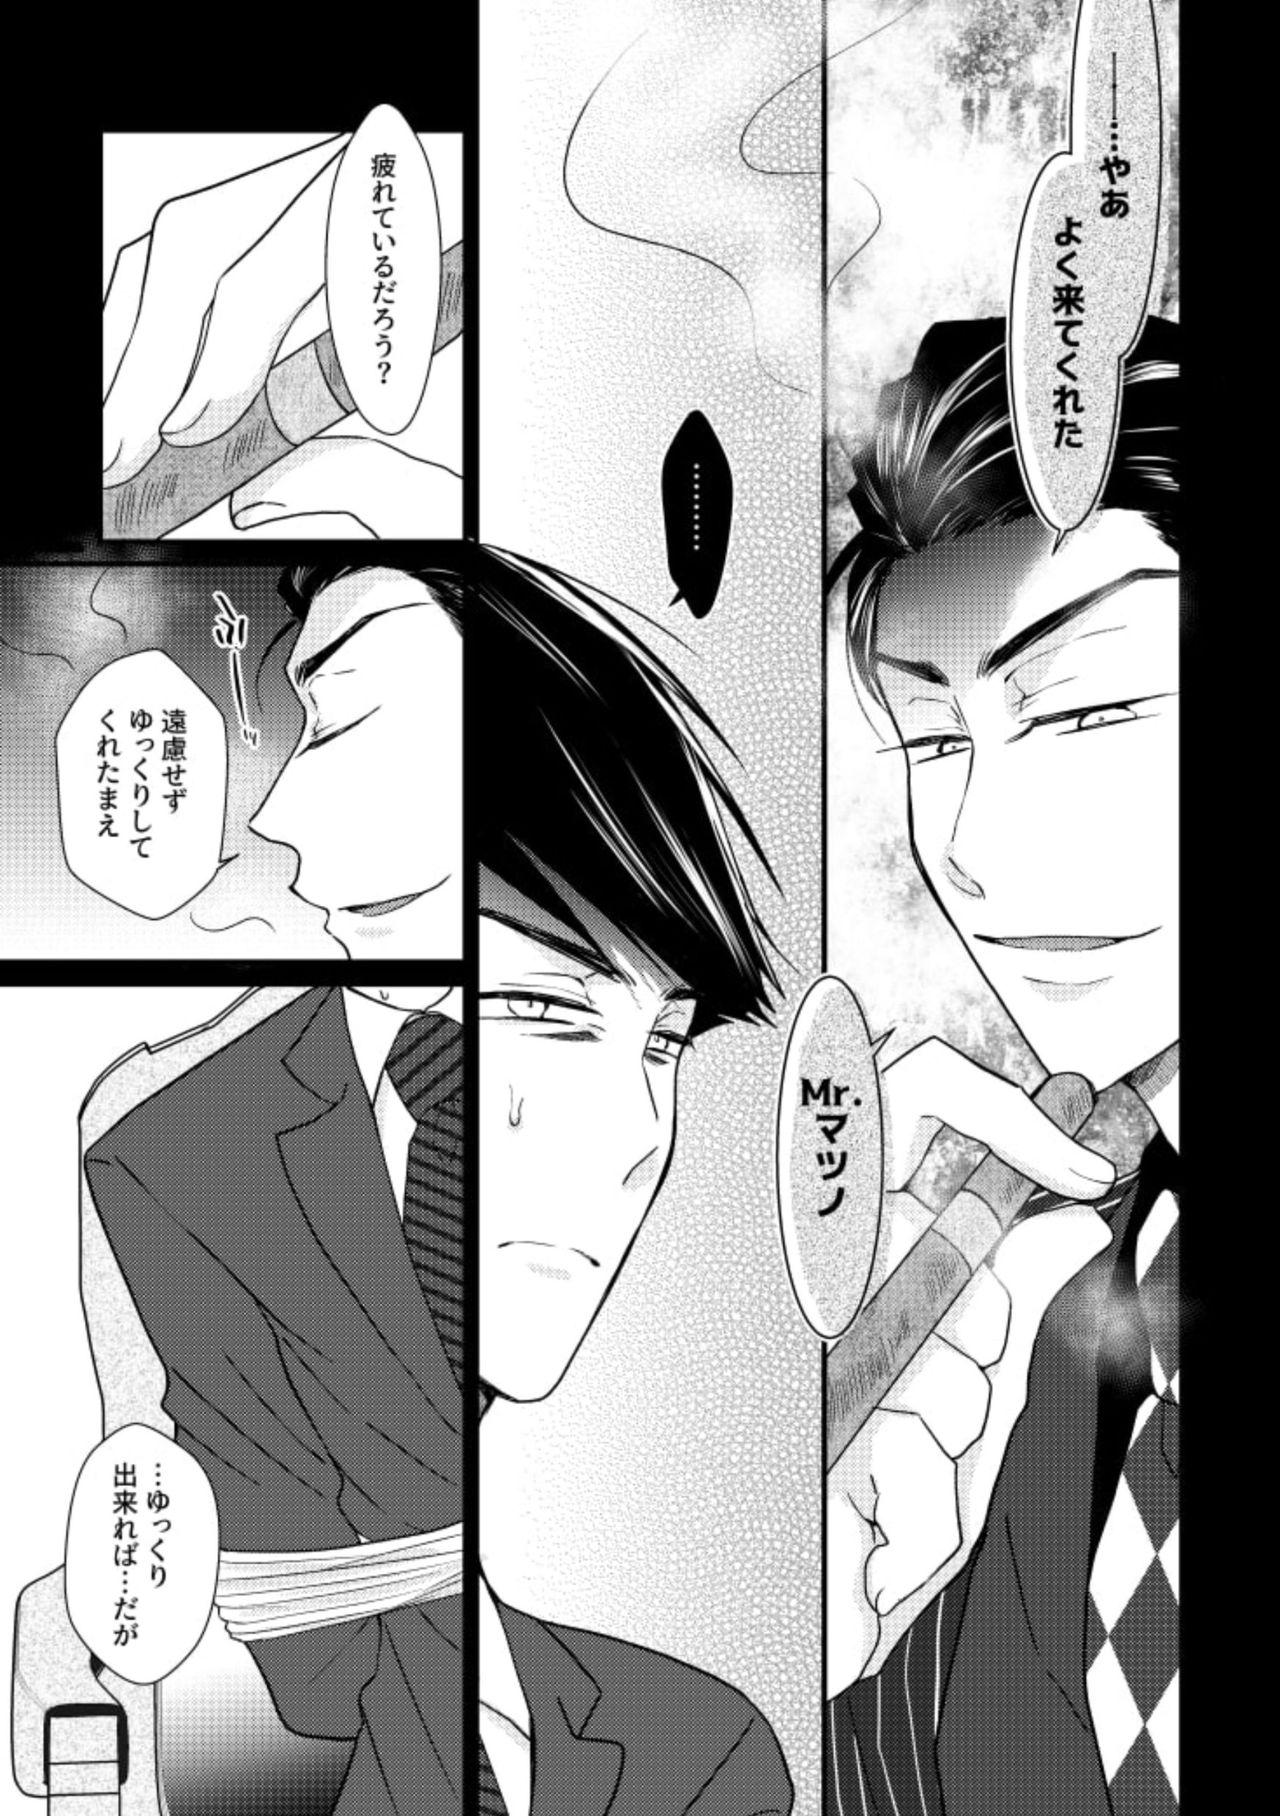 Jerking Owngame - Osomatsu-san Unshaved - Page 4